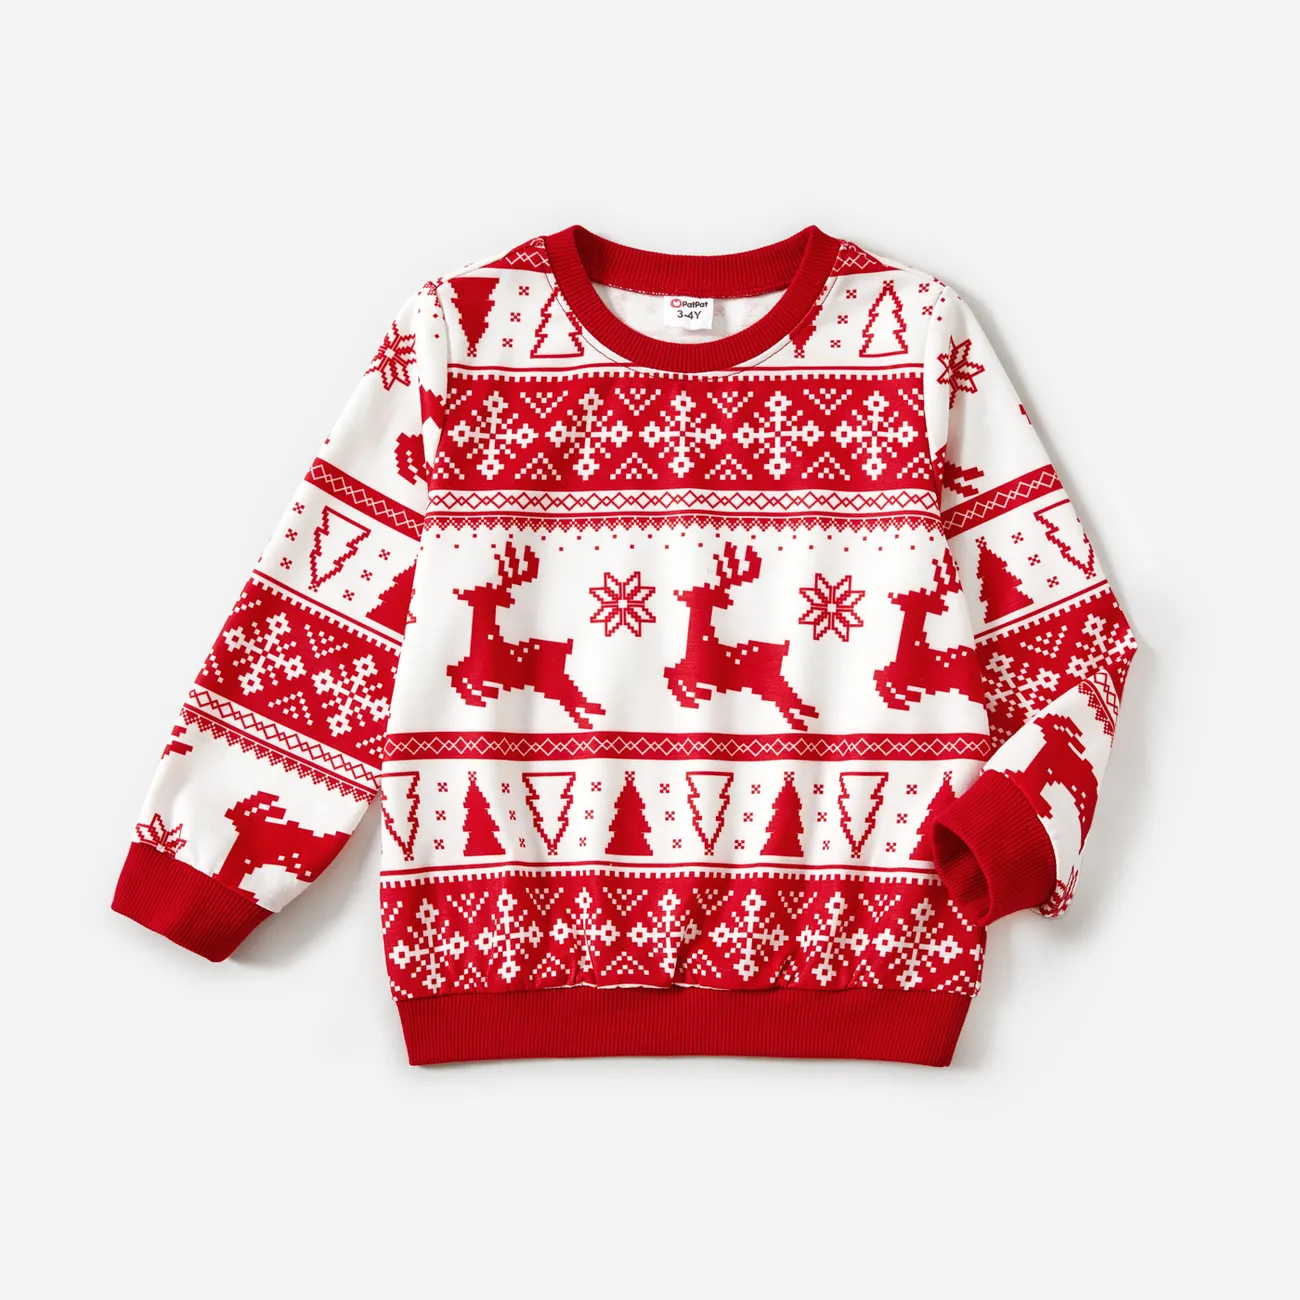 Christmas Family Matching Reindeer All-over Print Long-sleeve Tops  big image 1